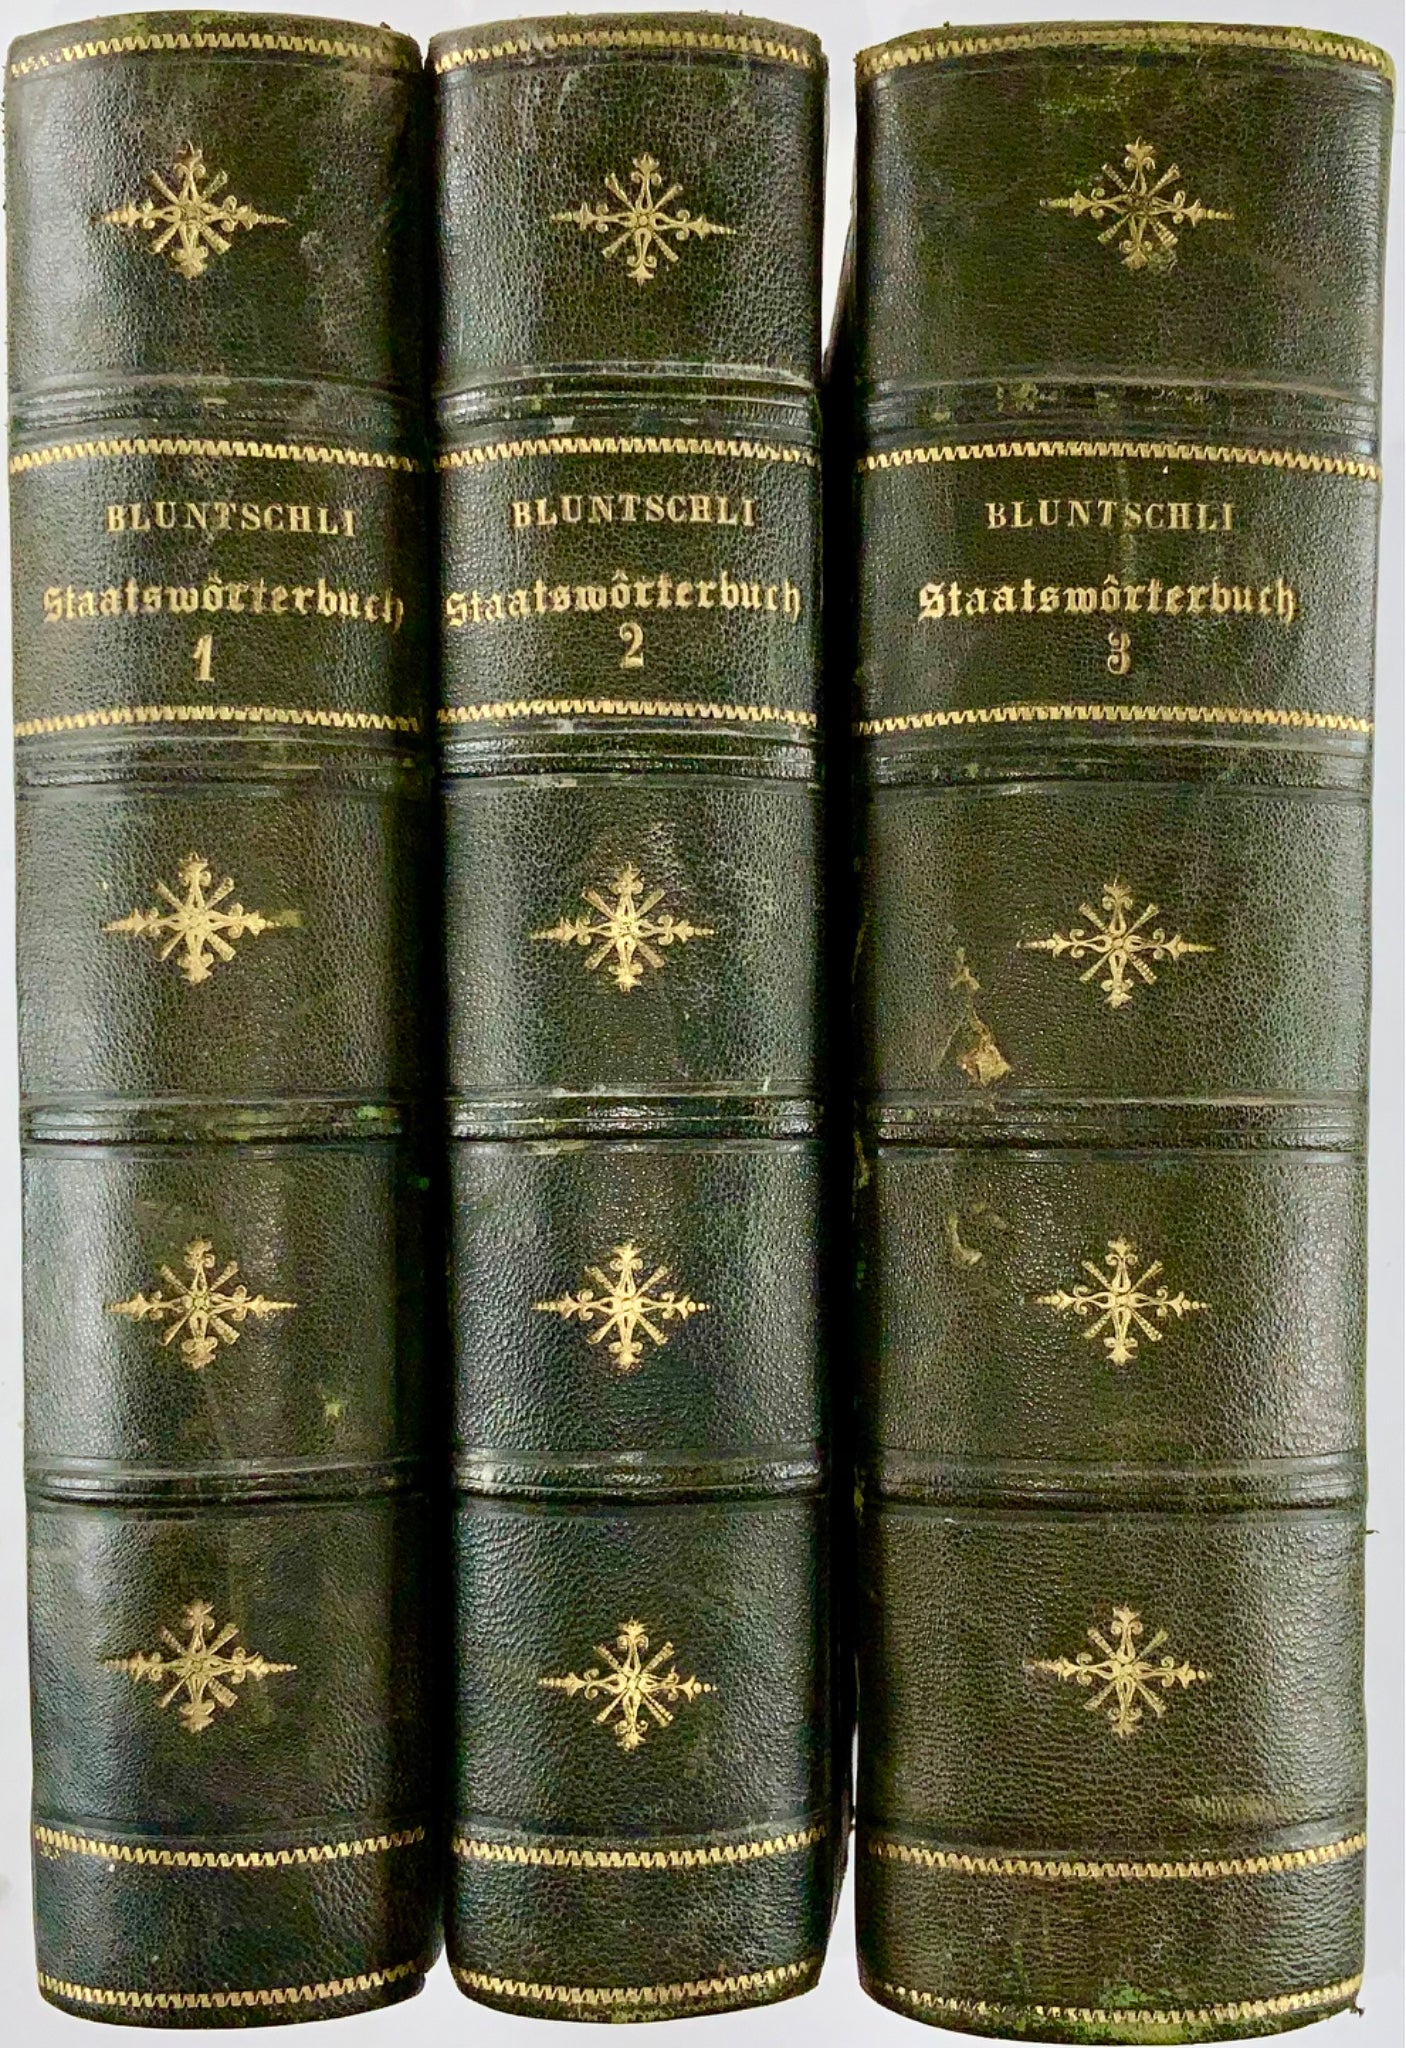 1869 Bluntschli's Staatswörterbuch. Ethical Hegelian theory of State. 3 vols. Helvetica, book